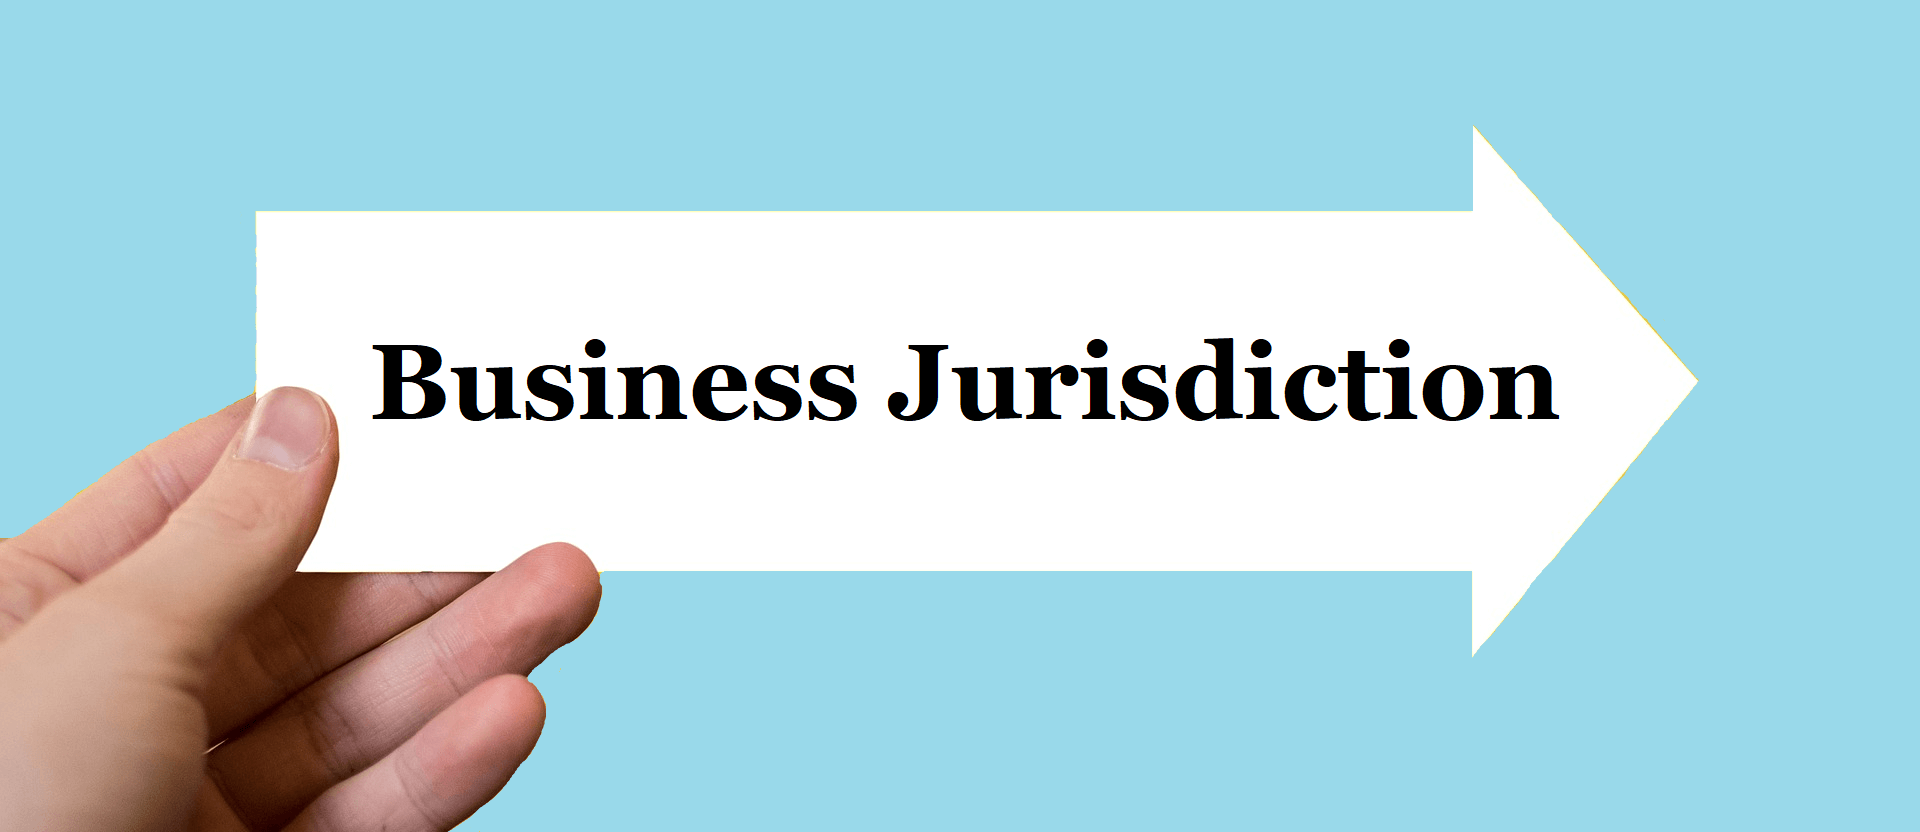 Select a business jurisdiction for the business setup in dubai